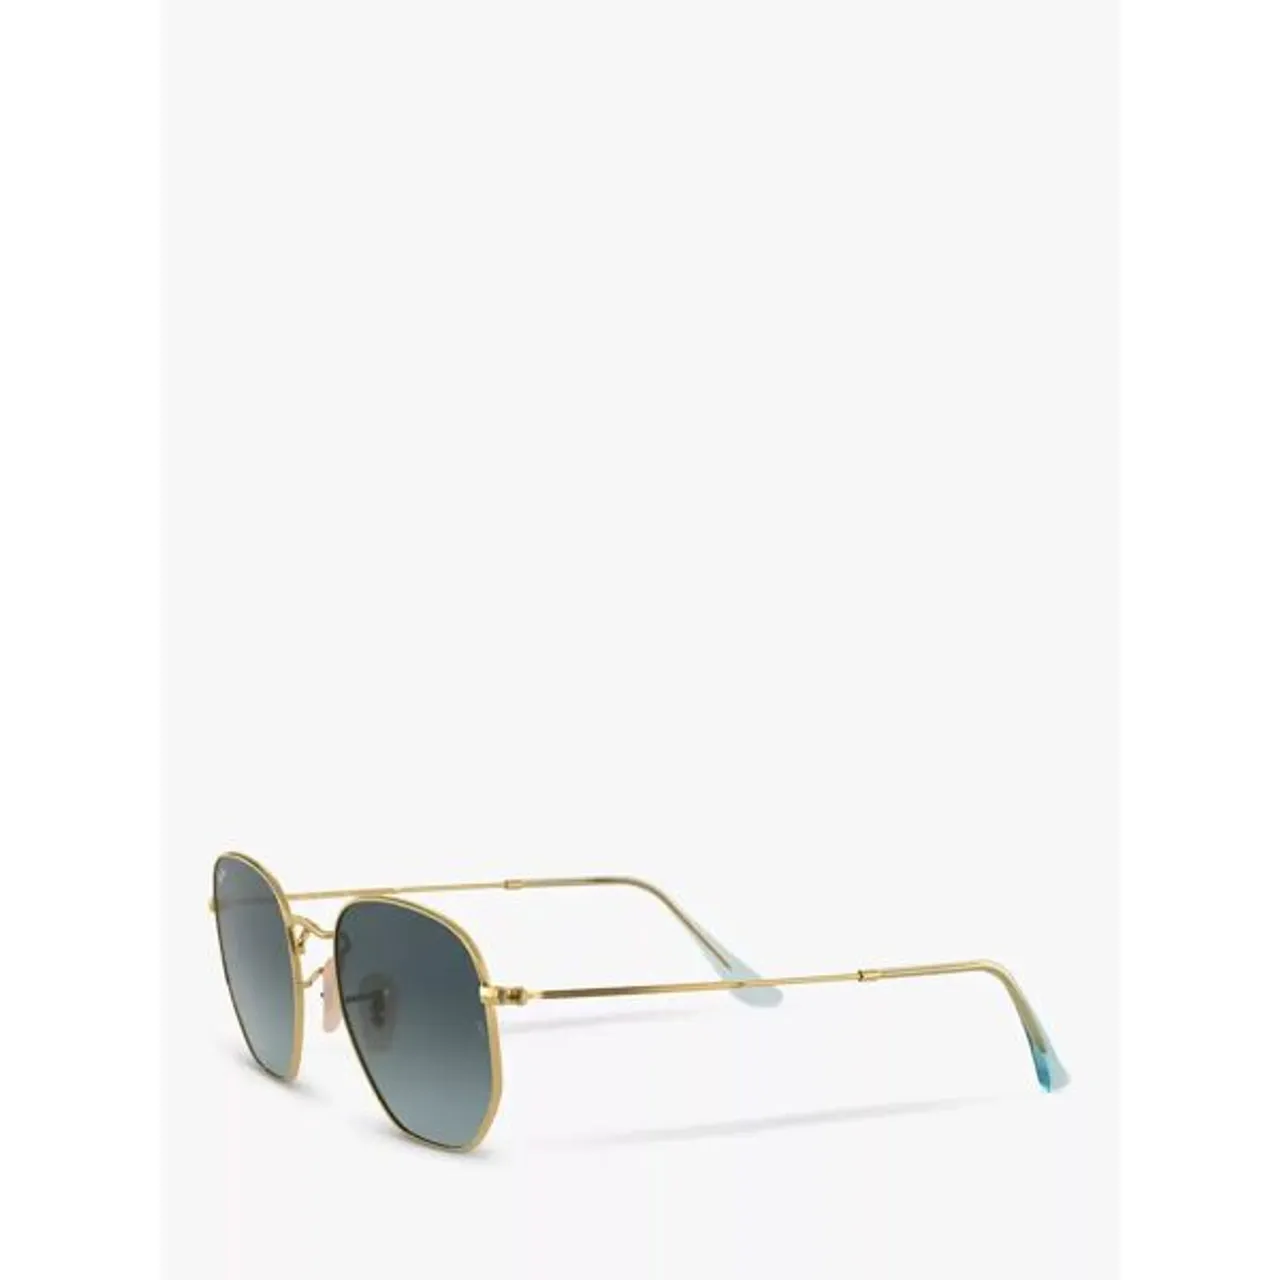 Ray-Ban RB3548N Unisex Hexagonal Sunglasses, Gold/Blue Gradient - Gold/Blue Gradient - Male